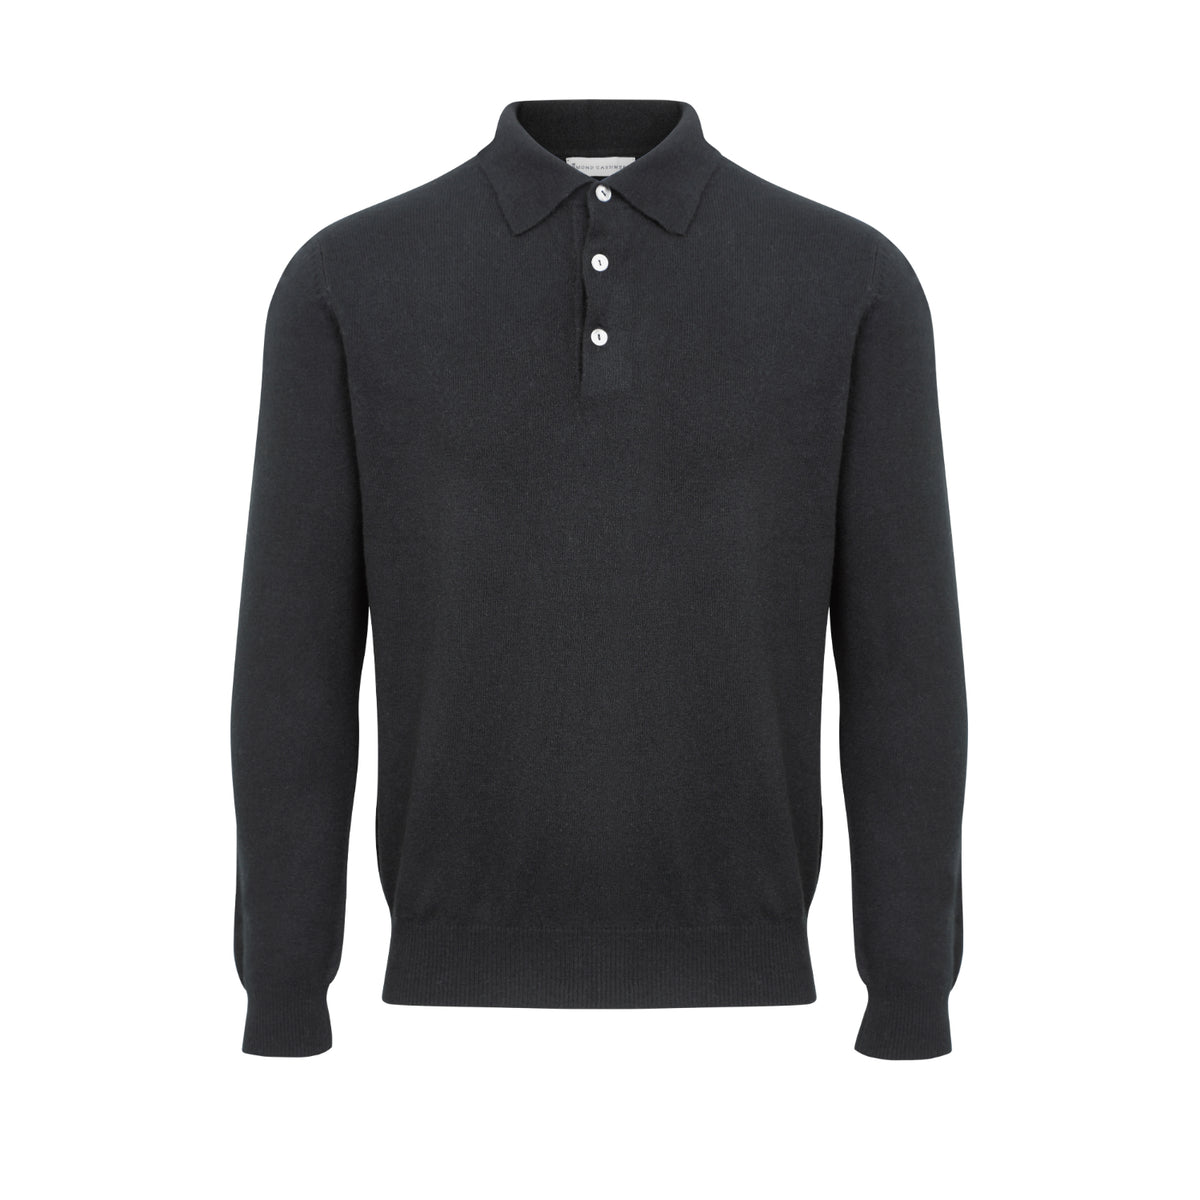 Lomond - Mens Cashmere Polo Shirt Sweater - The Cashmere Choice